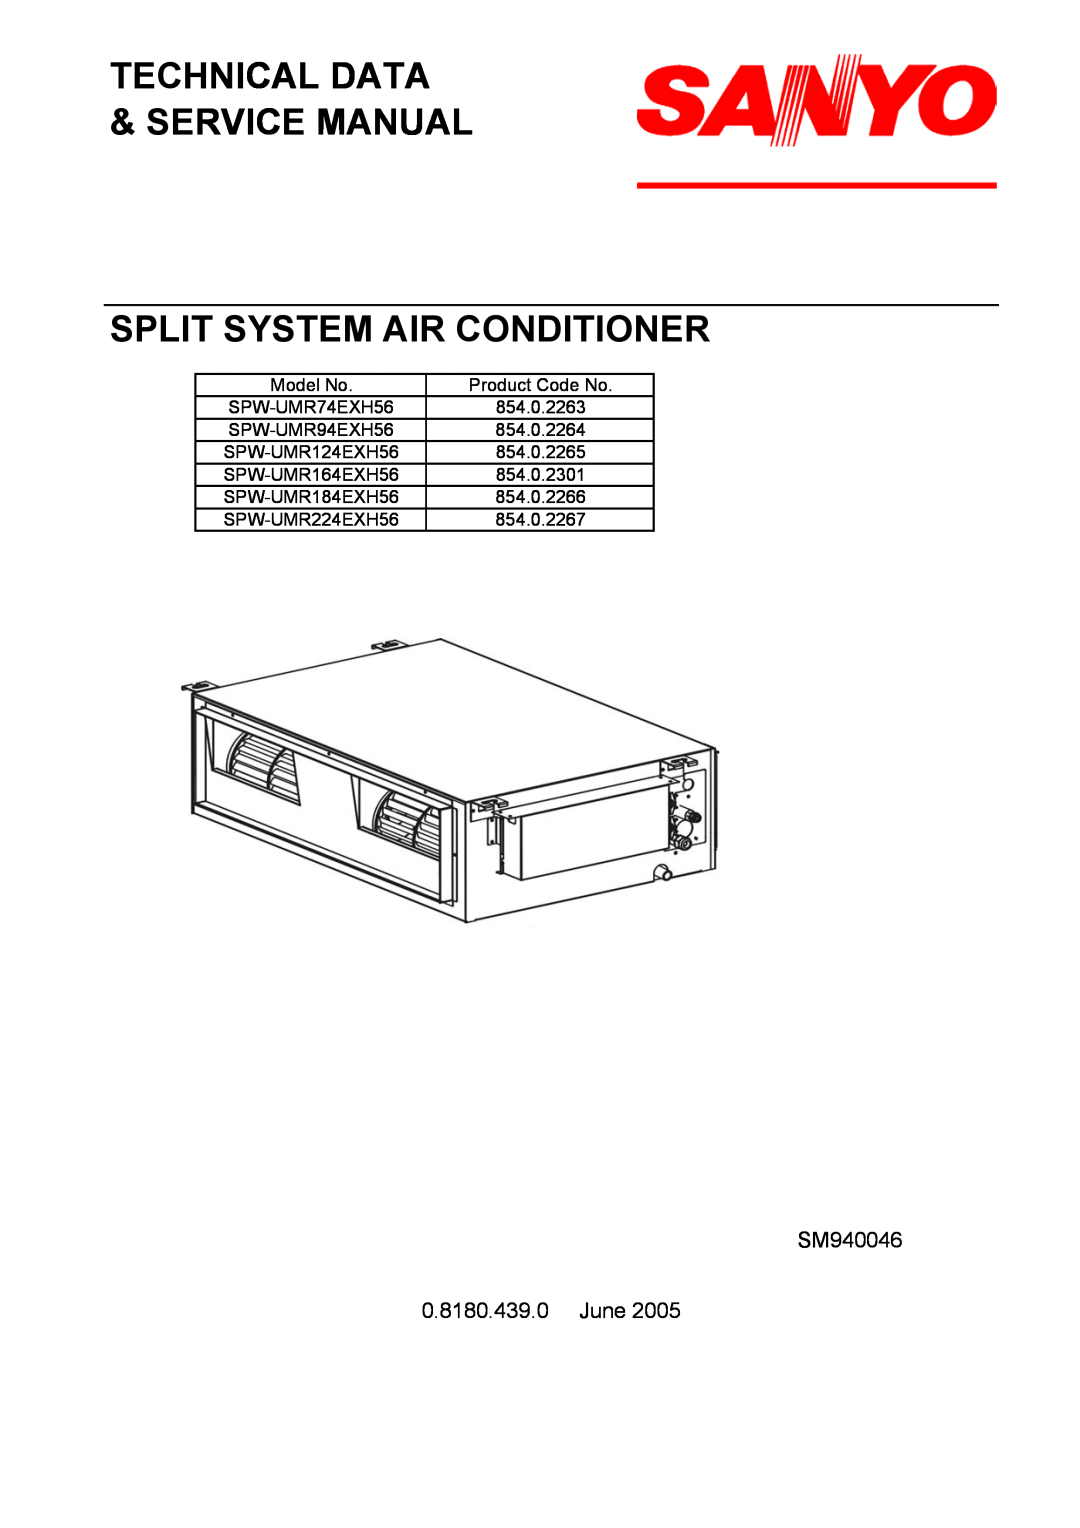 Sanyo SPW-UMR94EXH56, SPW-UMR184EXH56, SPW-UMR124EXH56 service manual Split System Air Conditioner, SM940046, June 